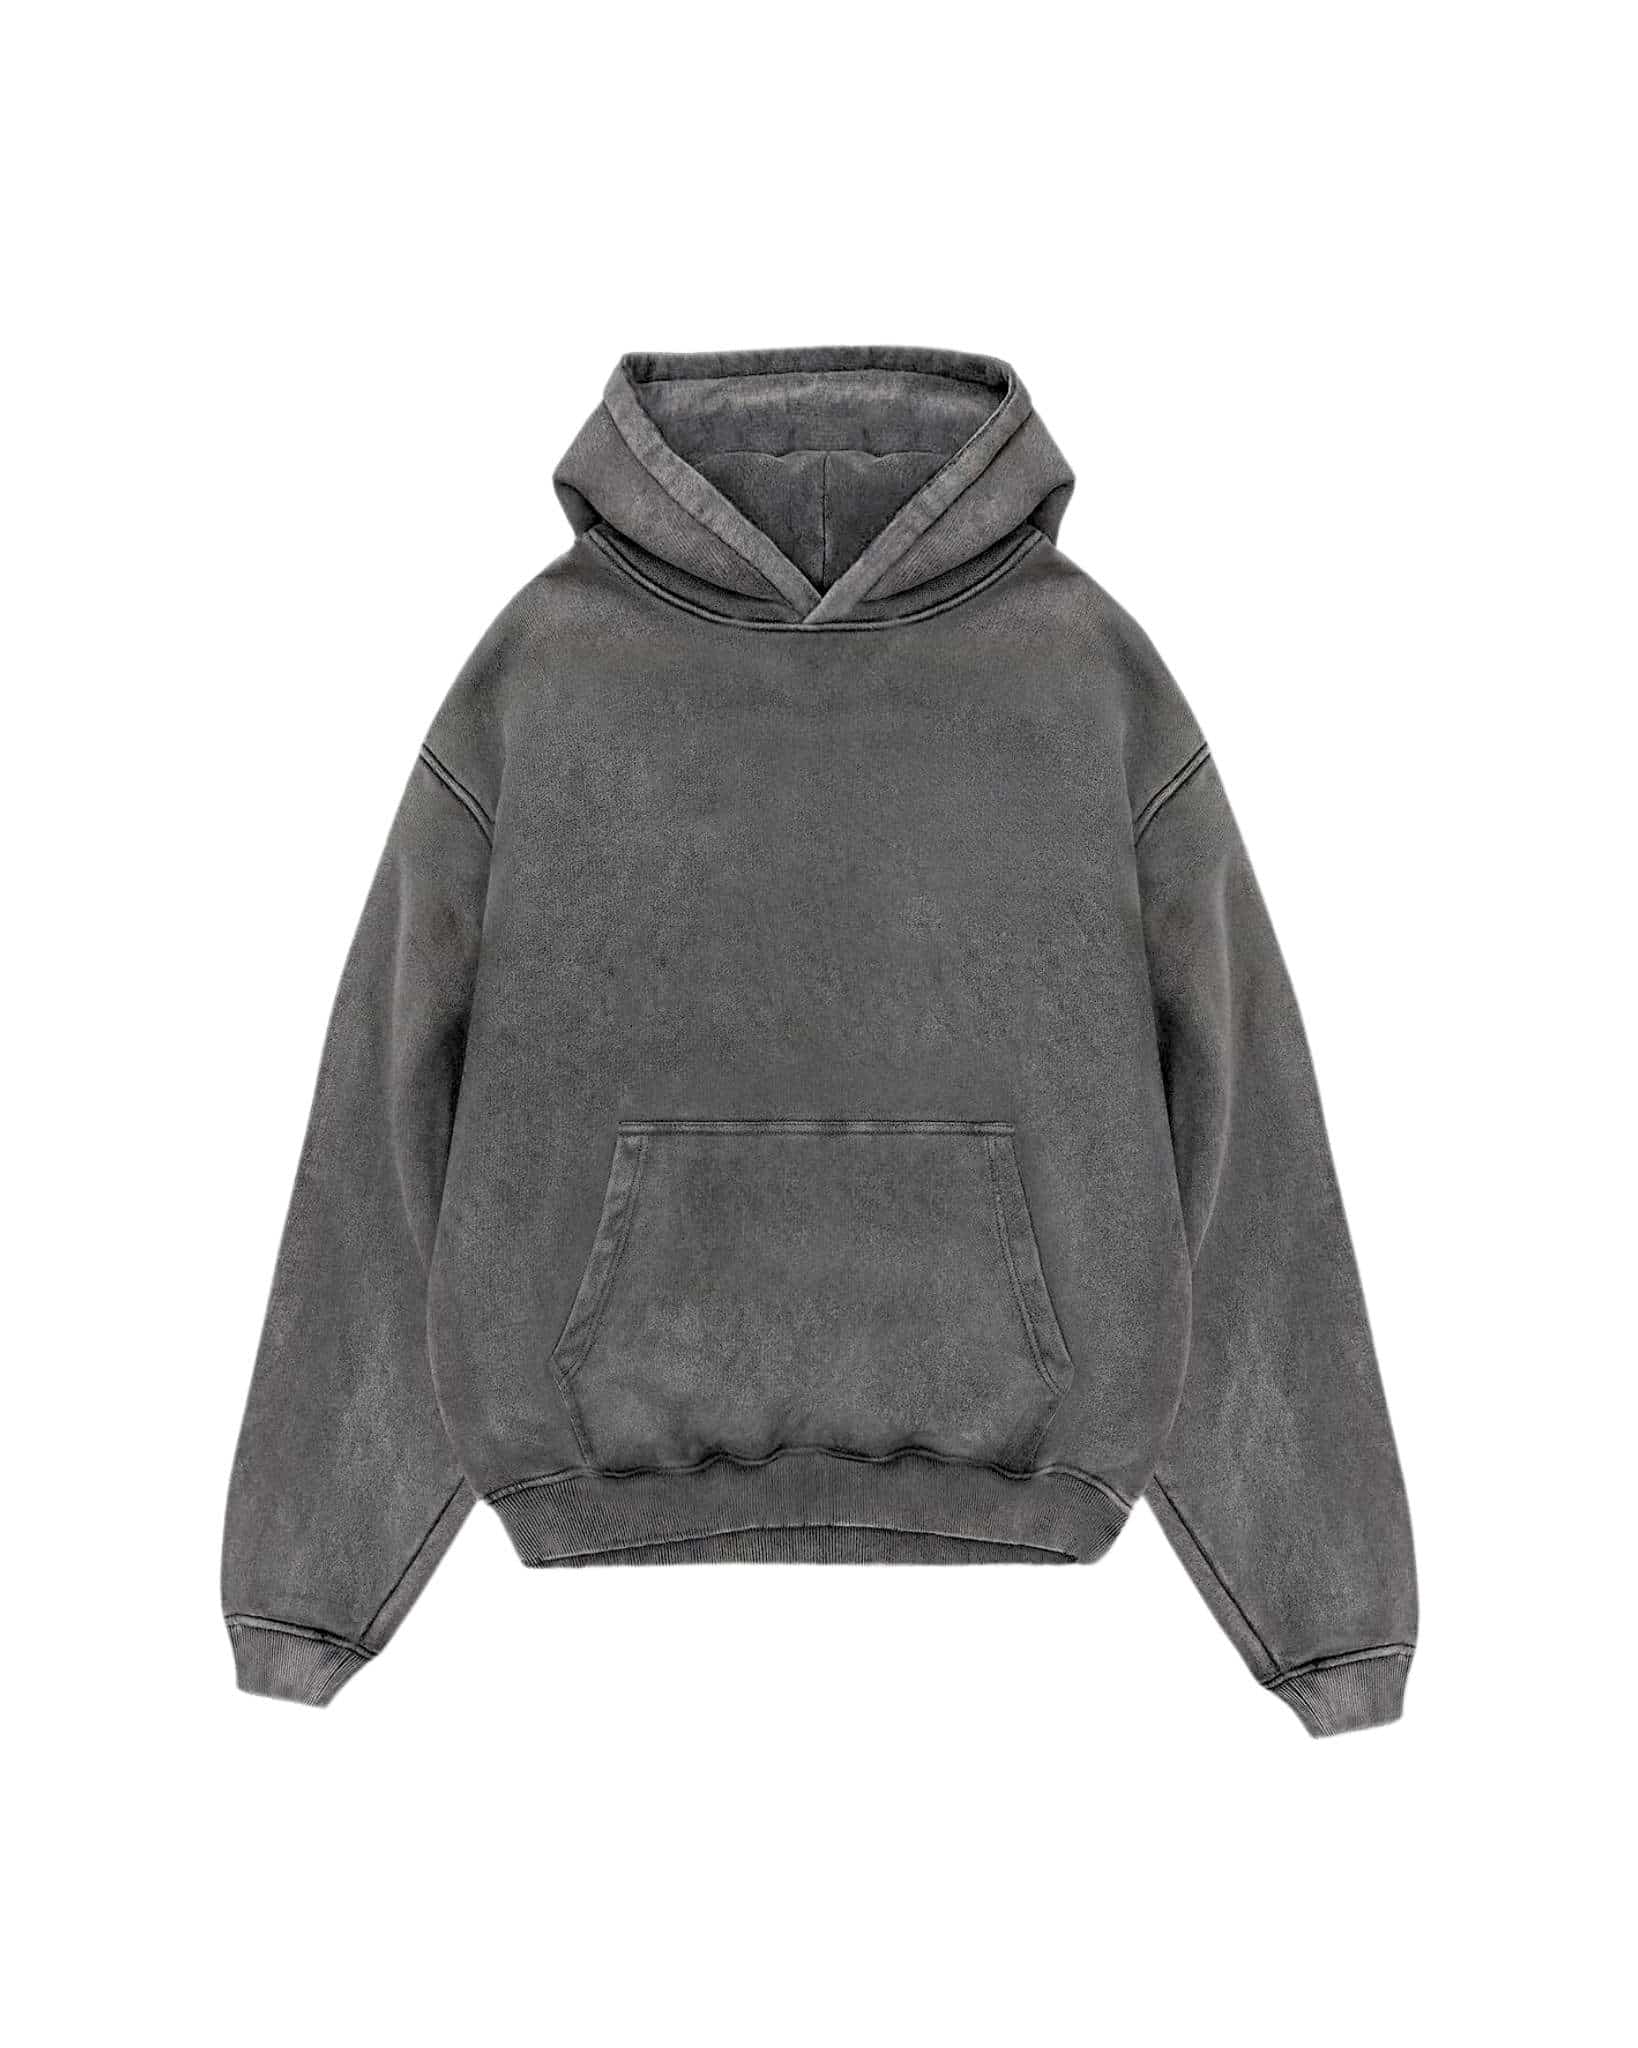 Branded, Stylish and Premium Quality Double Hooded Sweatshirts 